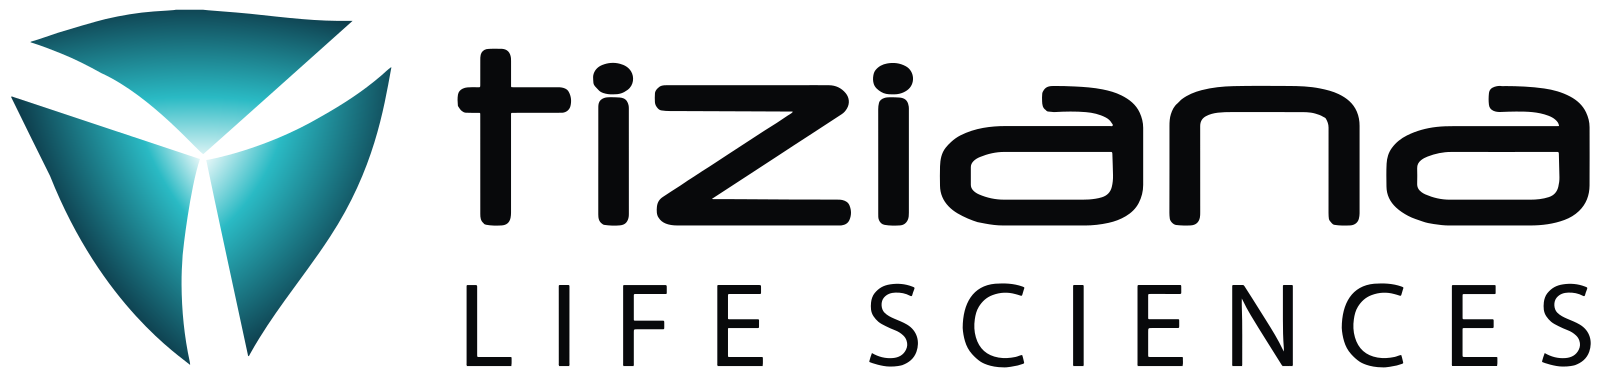 Tiziana Life Sciences logo large (transparent PNG)